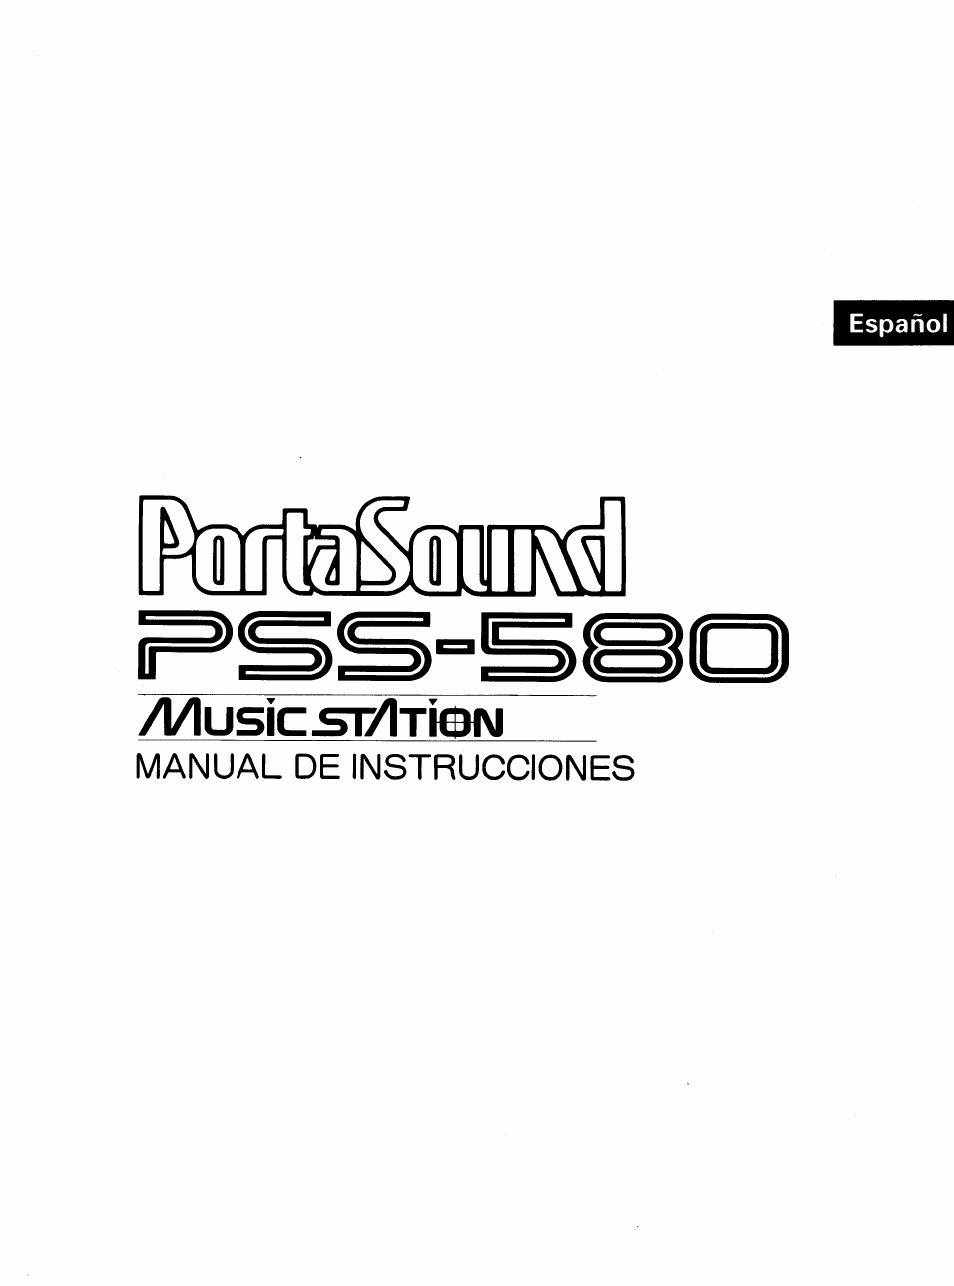 Yamaha PortaSound PSS-580 Manual del usuario | Páginas: 29